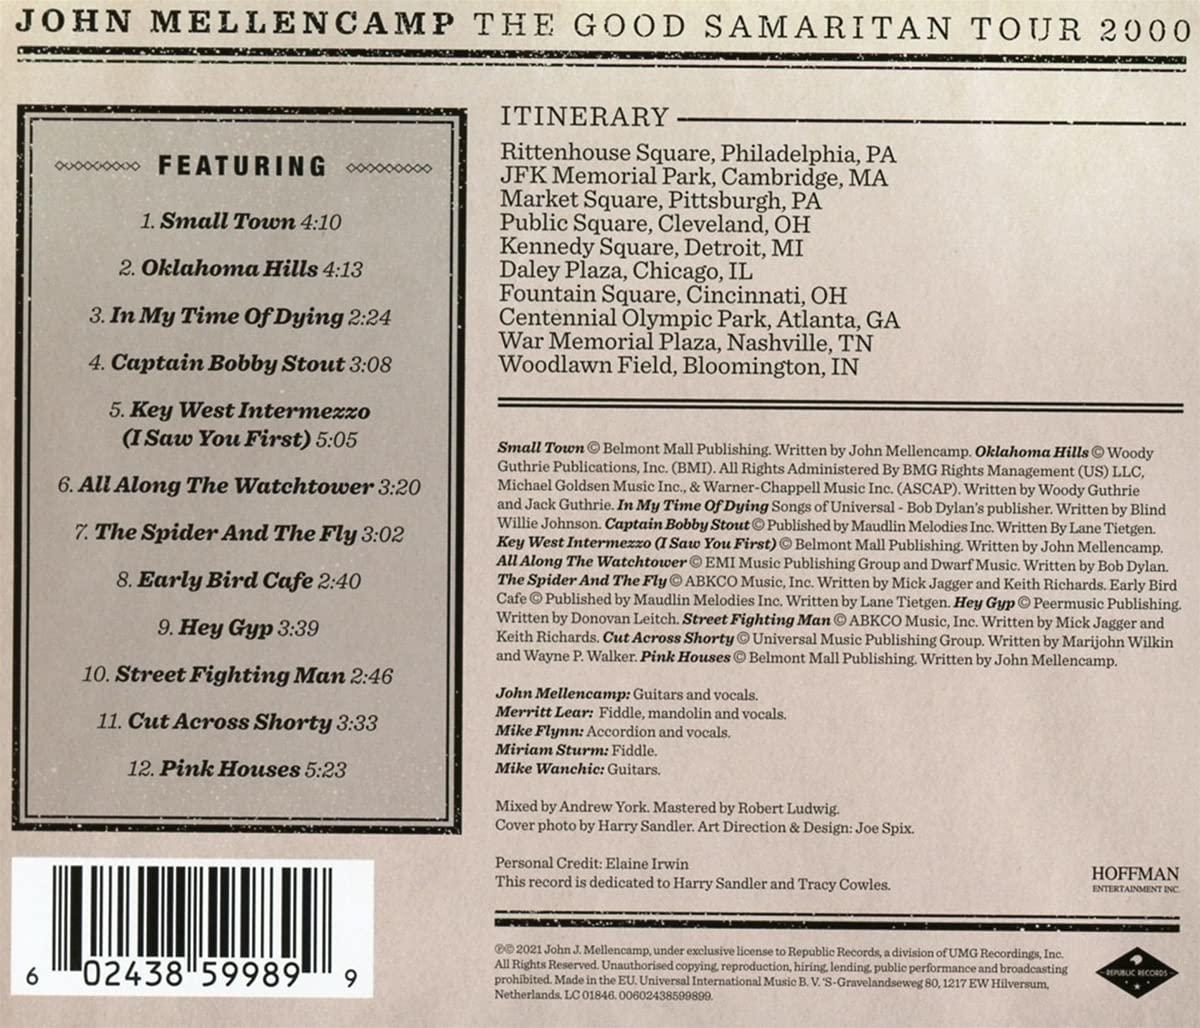 John Mellencamp - Samaritan - Good (CD + The Video) DVD Tour (CD+DVD) 2000